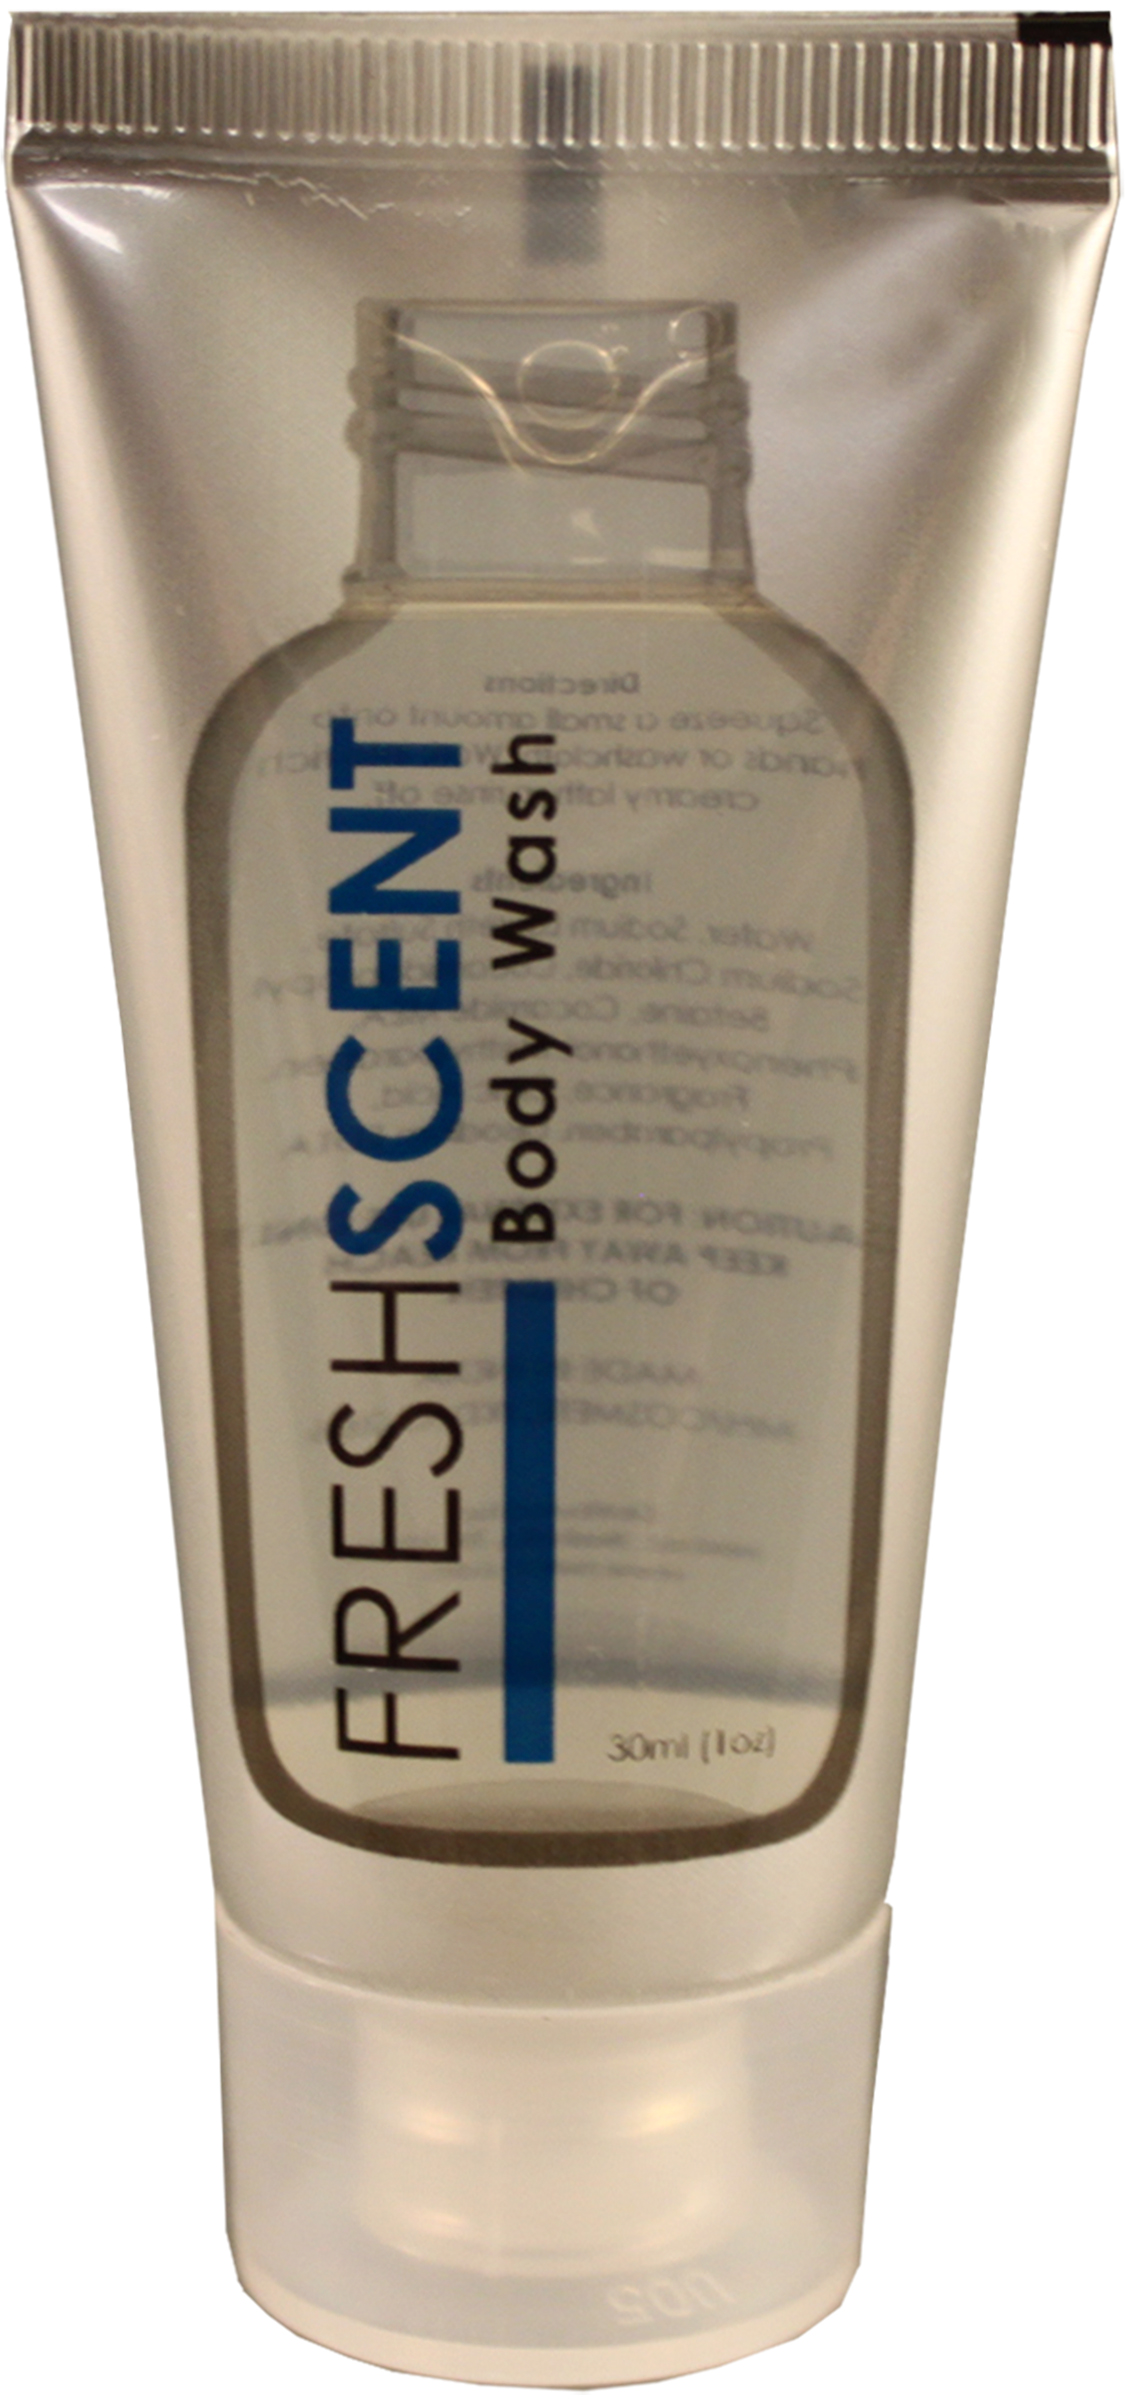 Freshscent 1 oz. Body Wash Tube